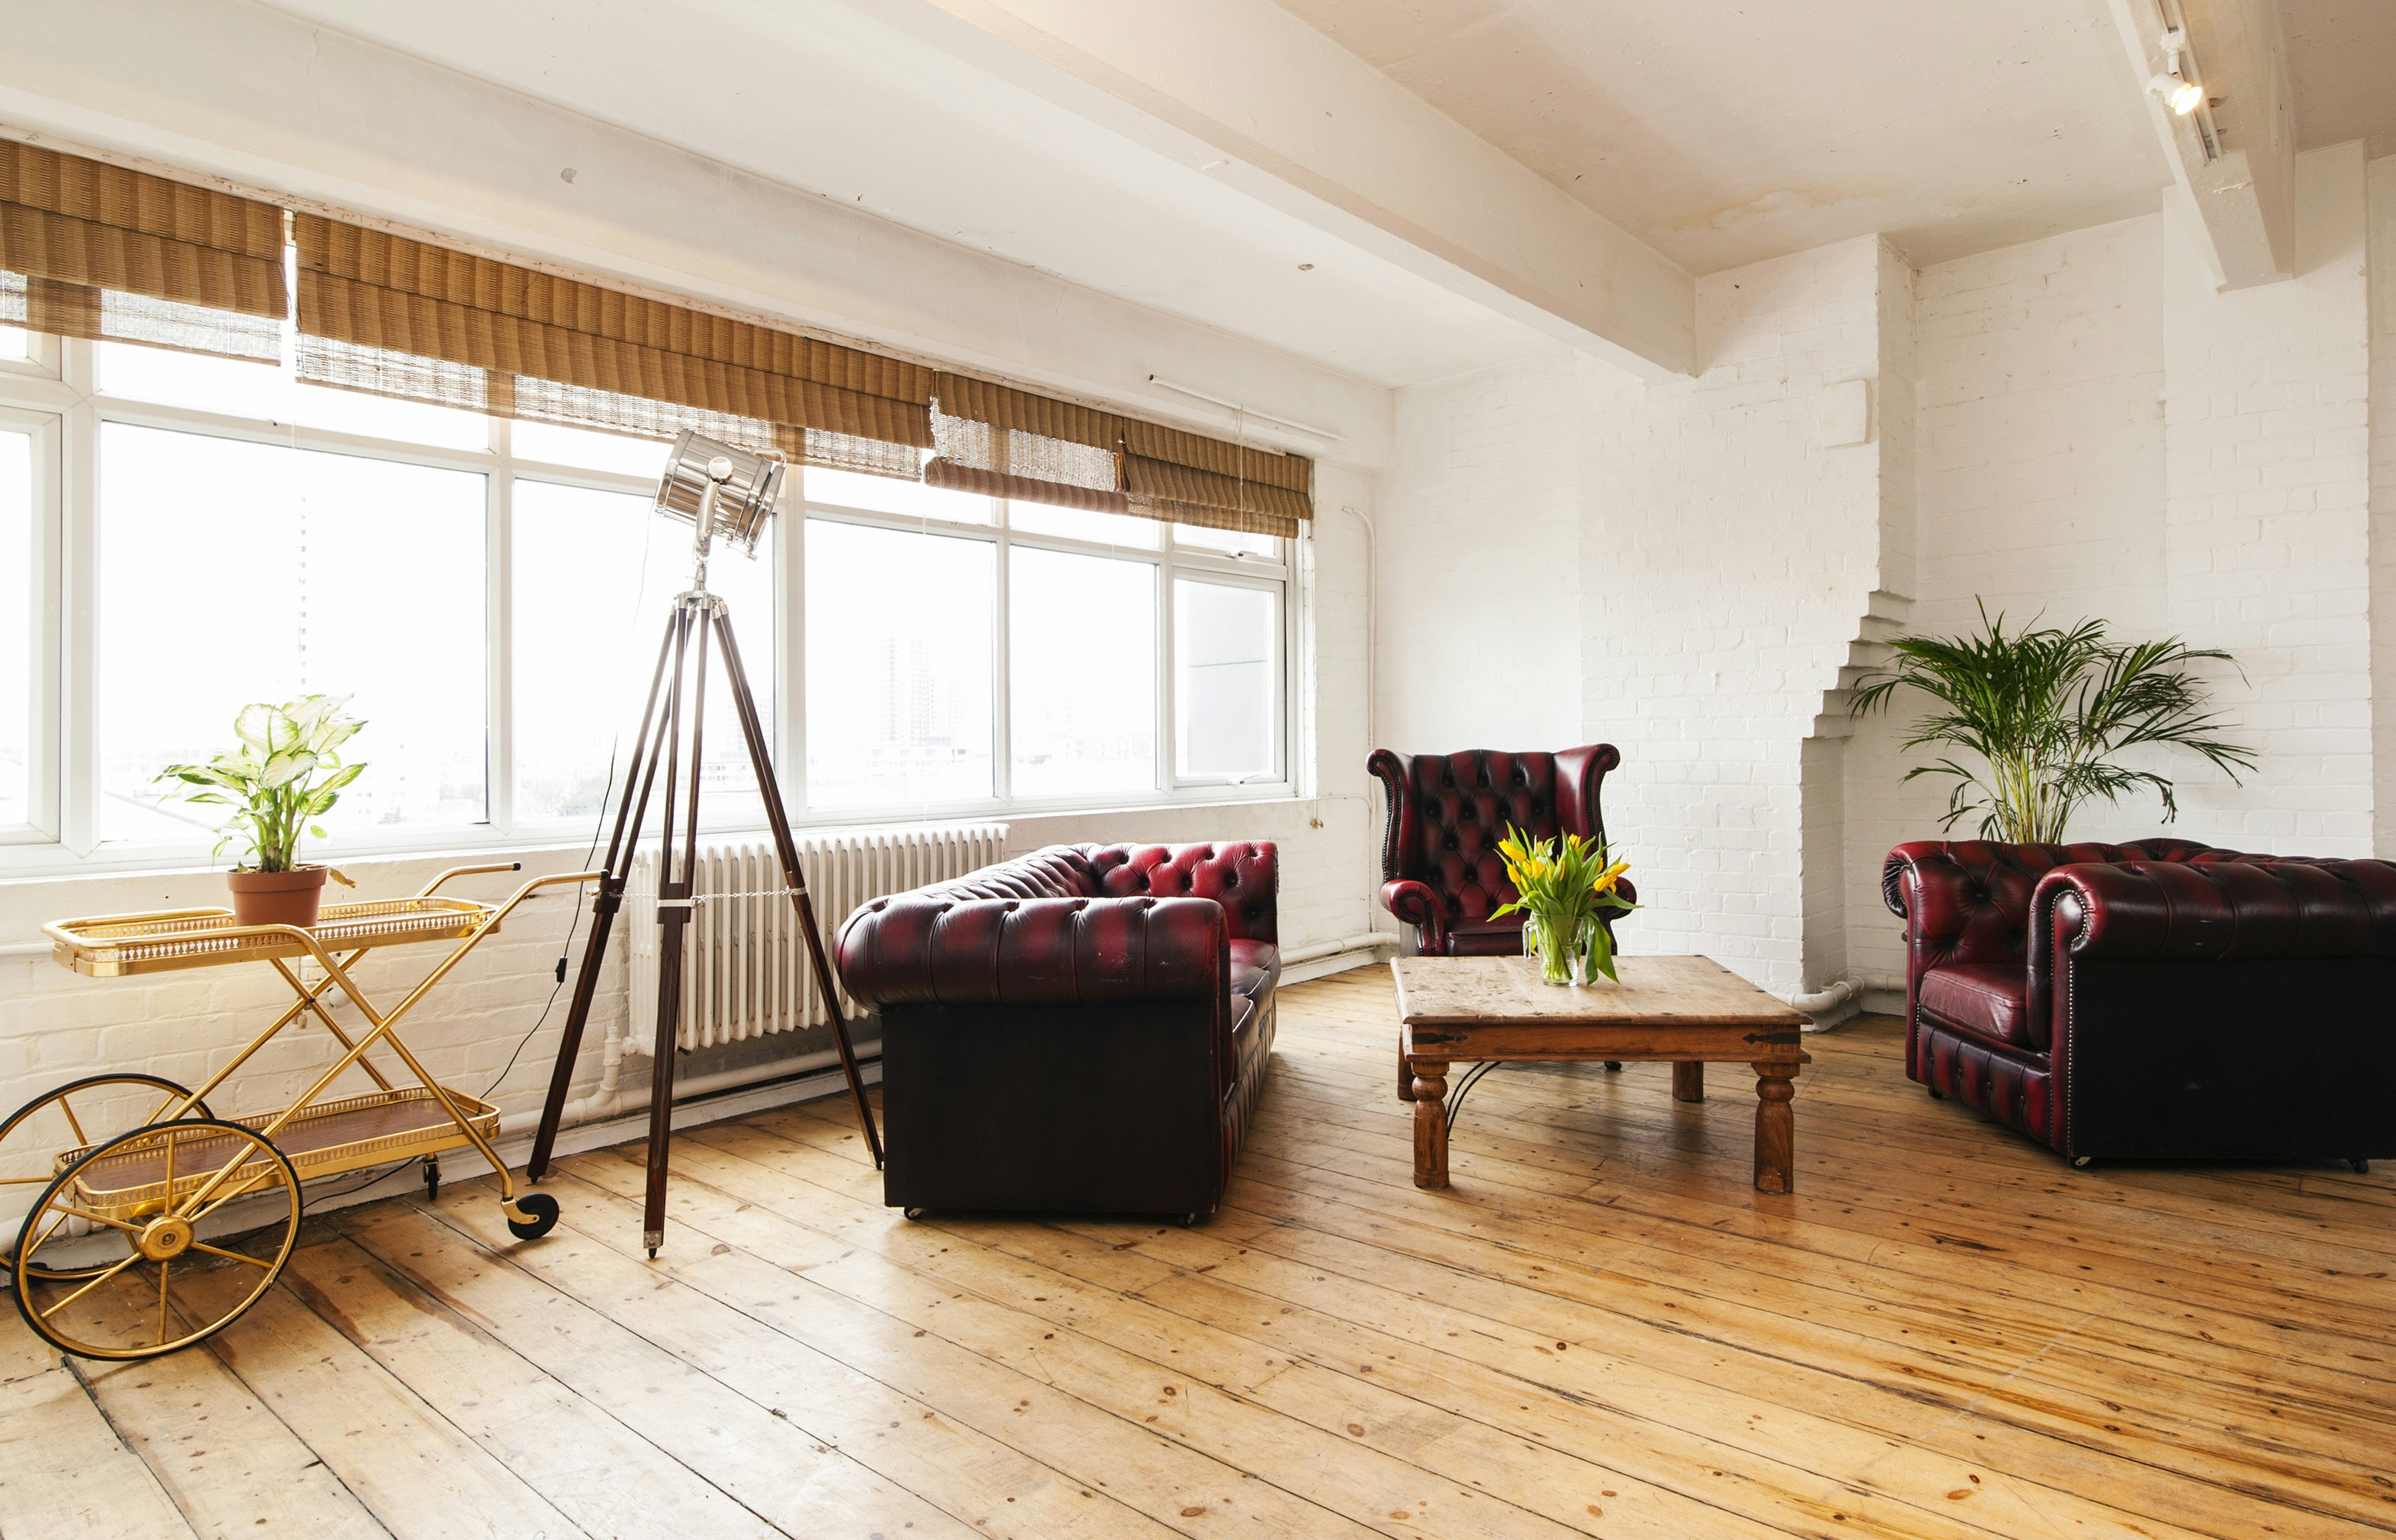 Recording Studios Venues in London - 4th Floor Studios